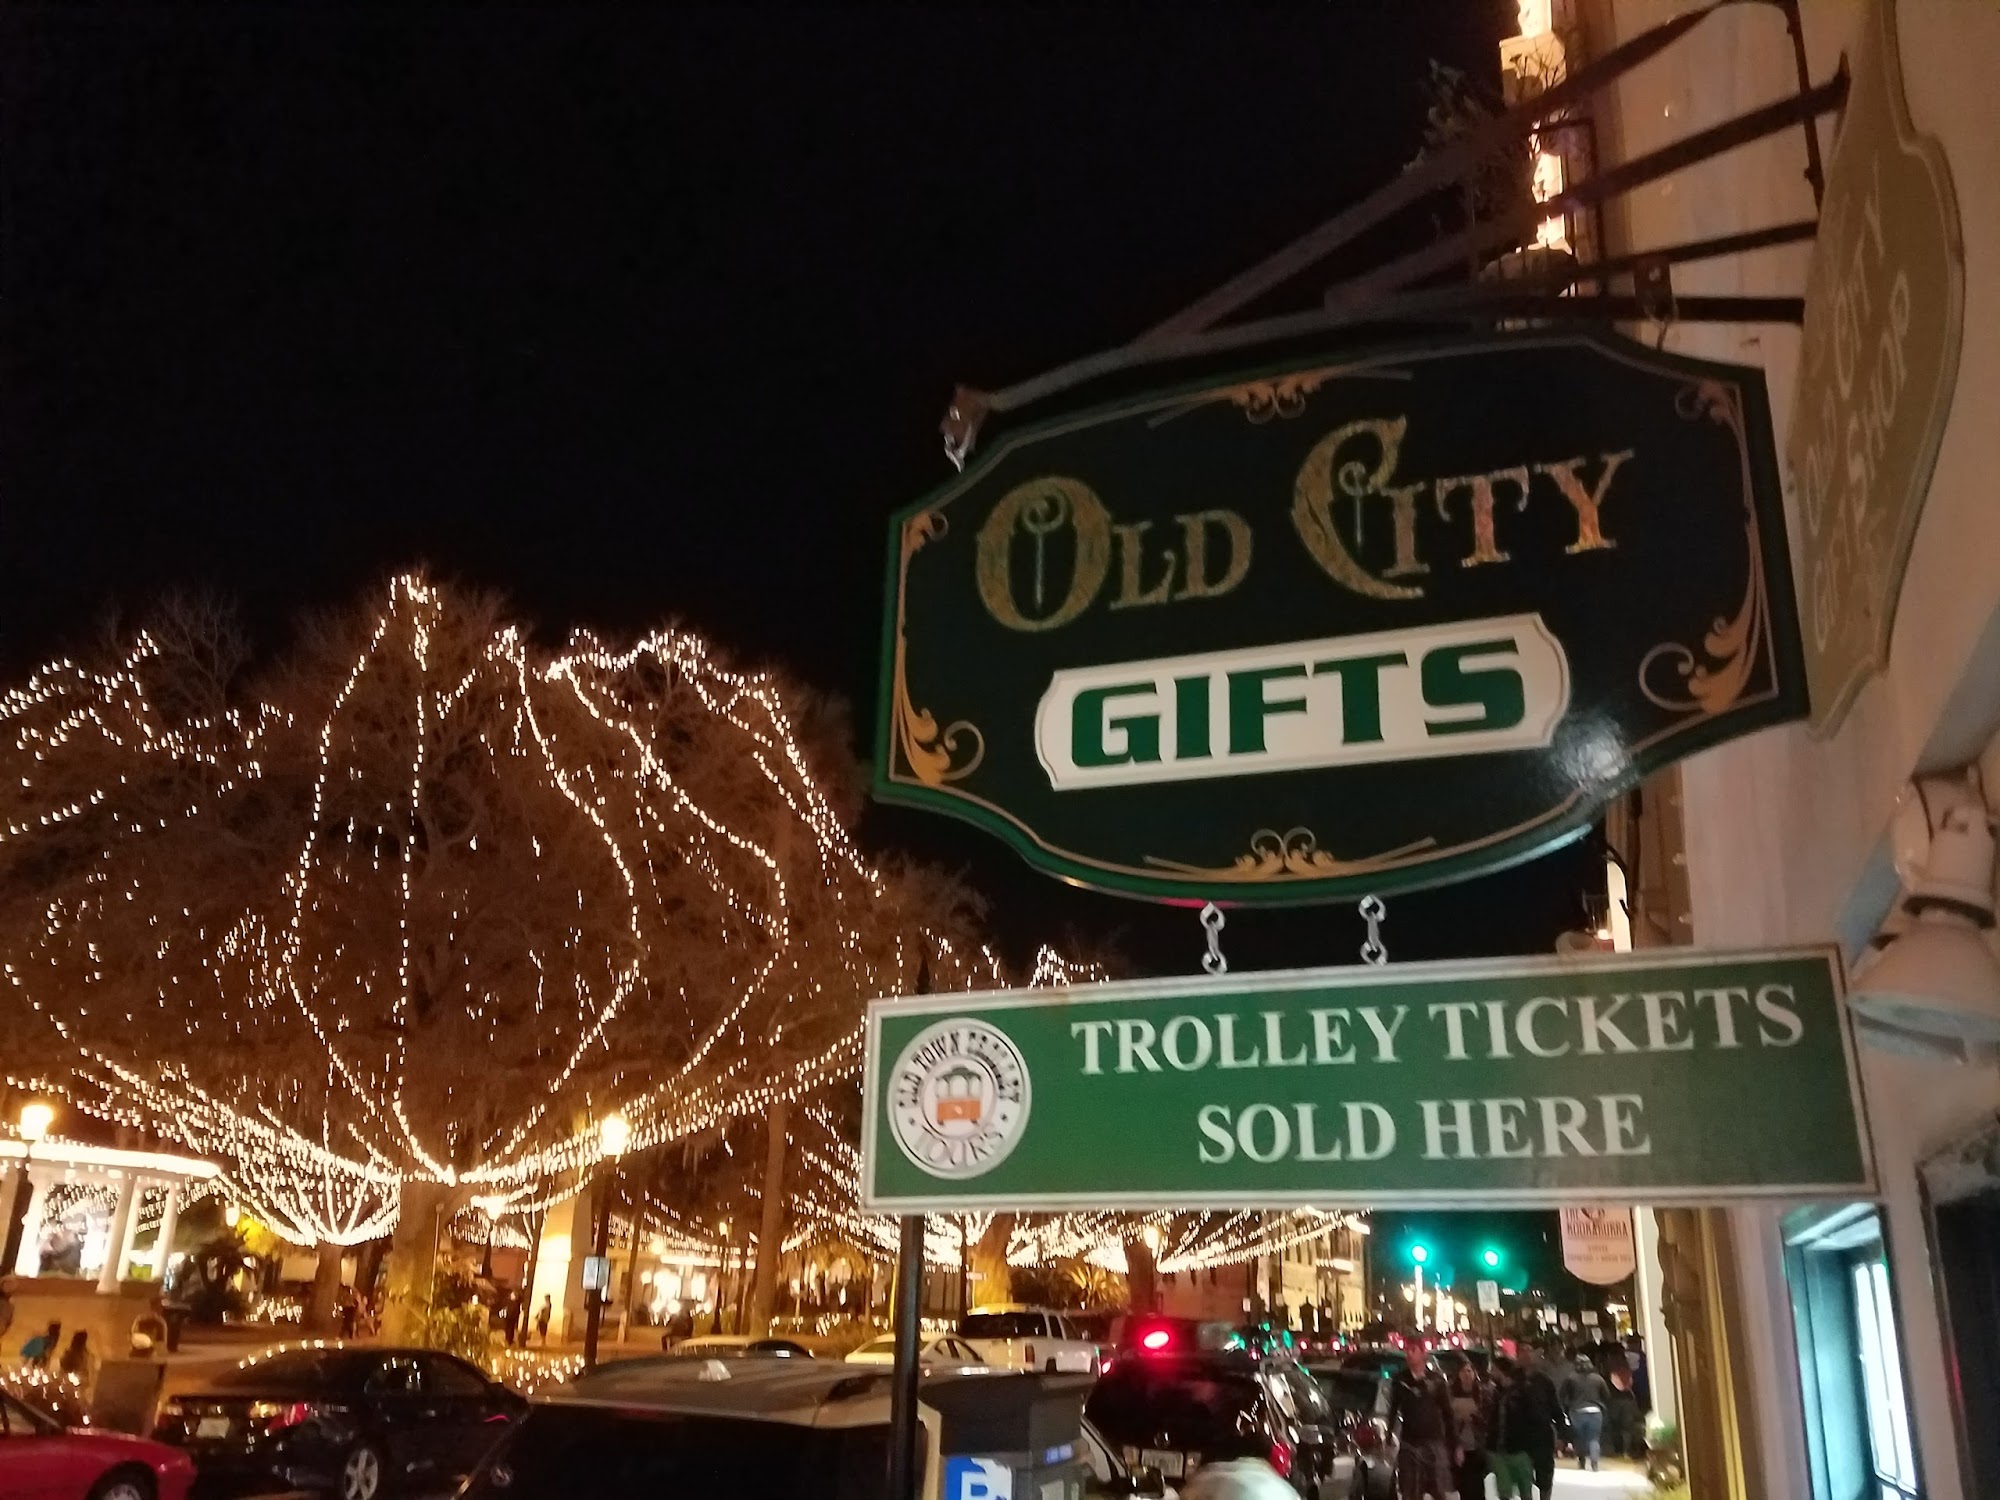 Old City Gift Shop